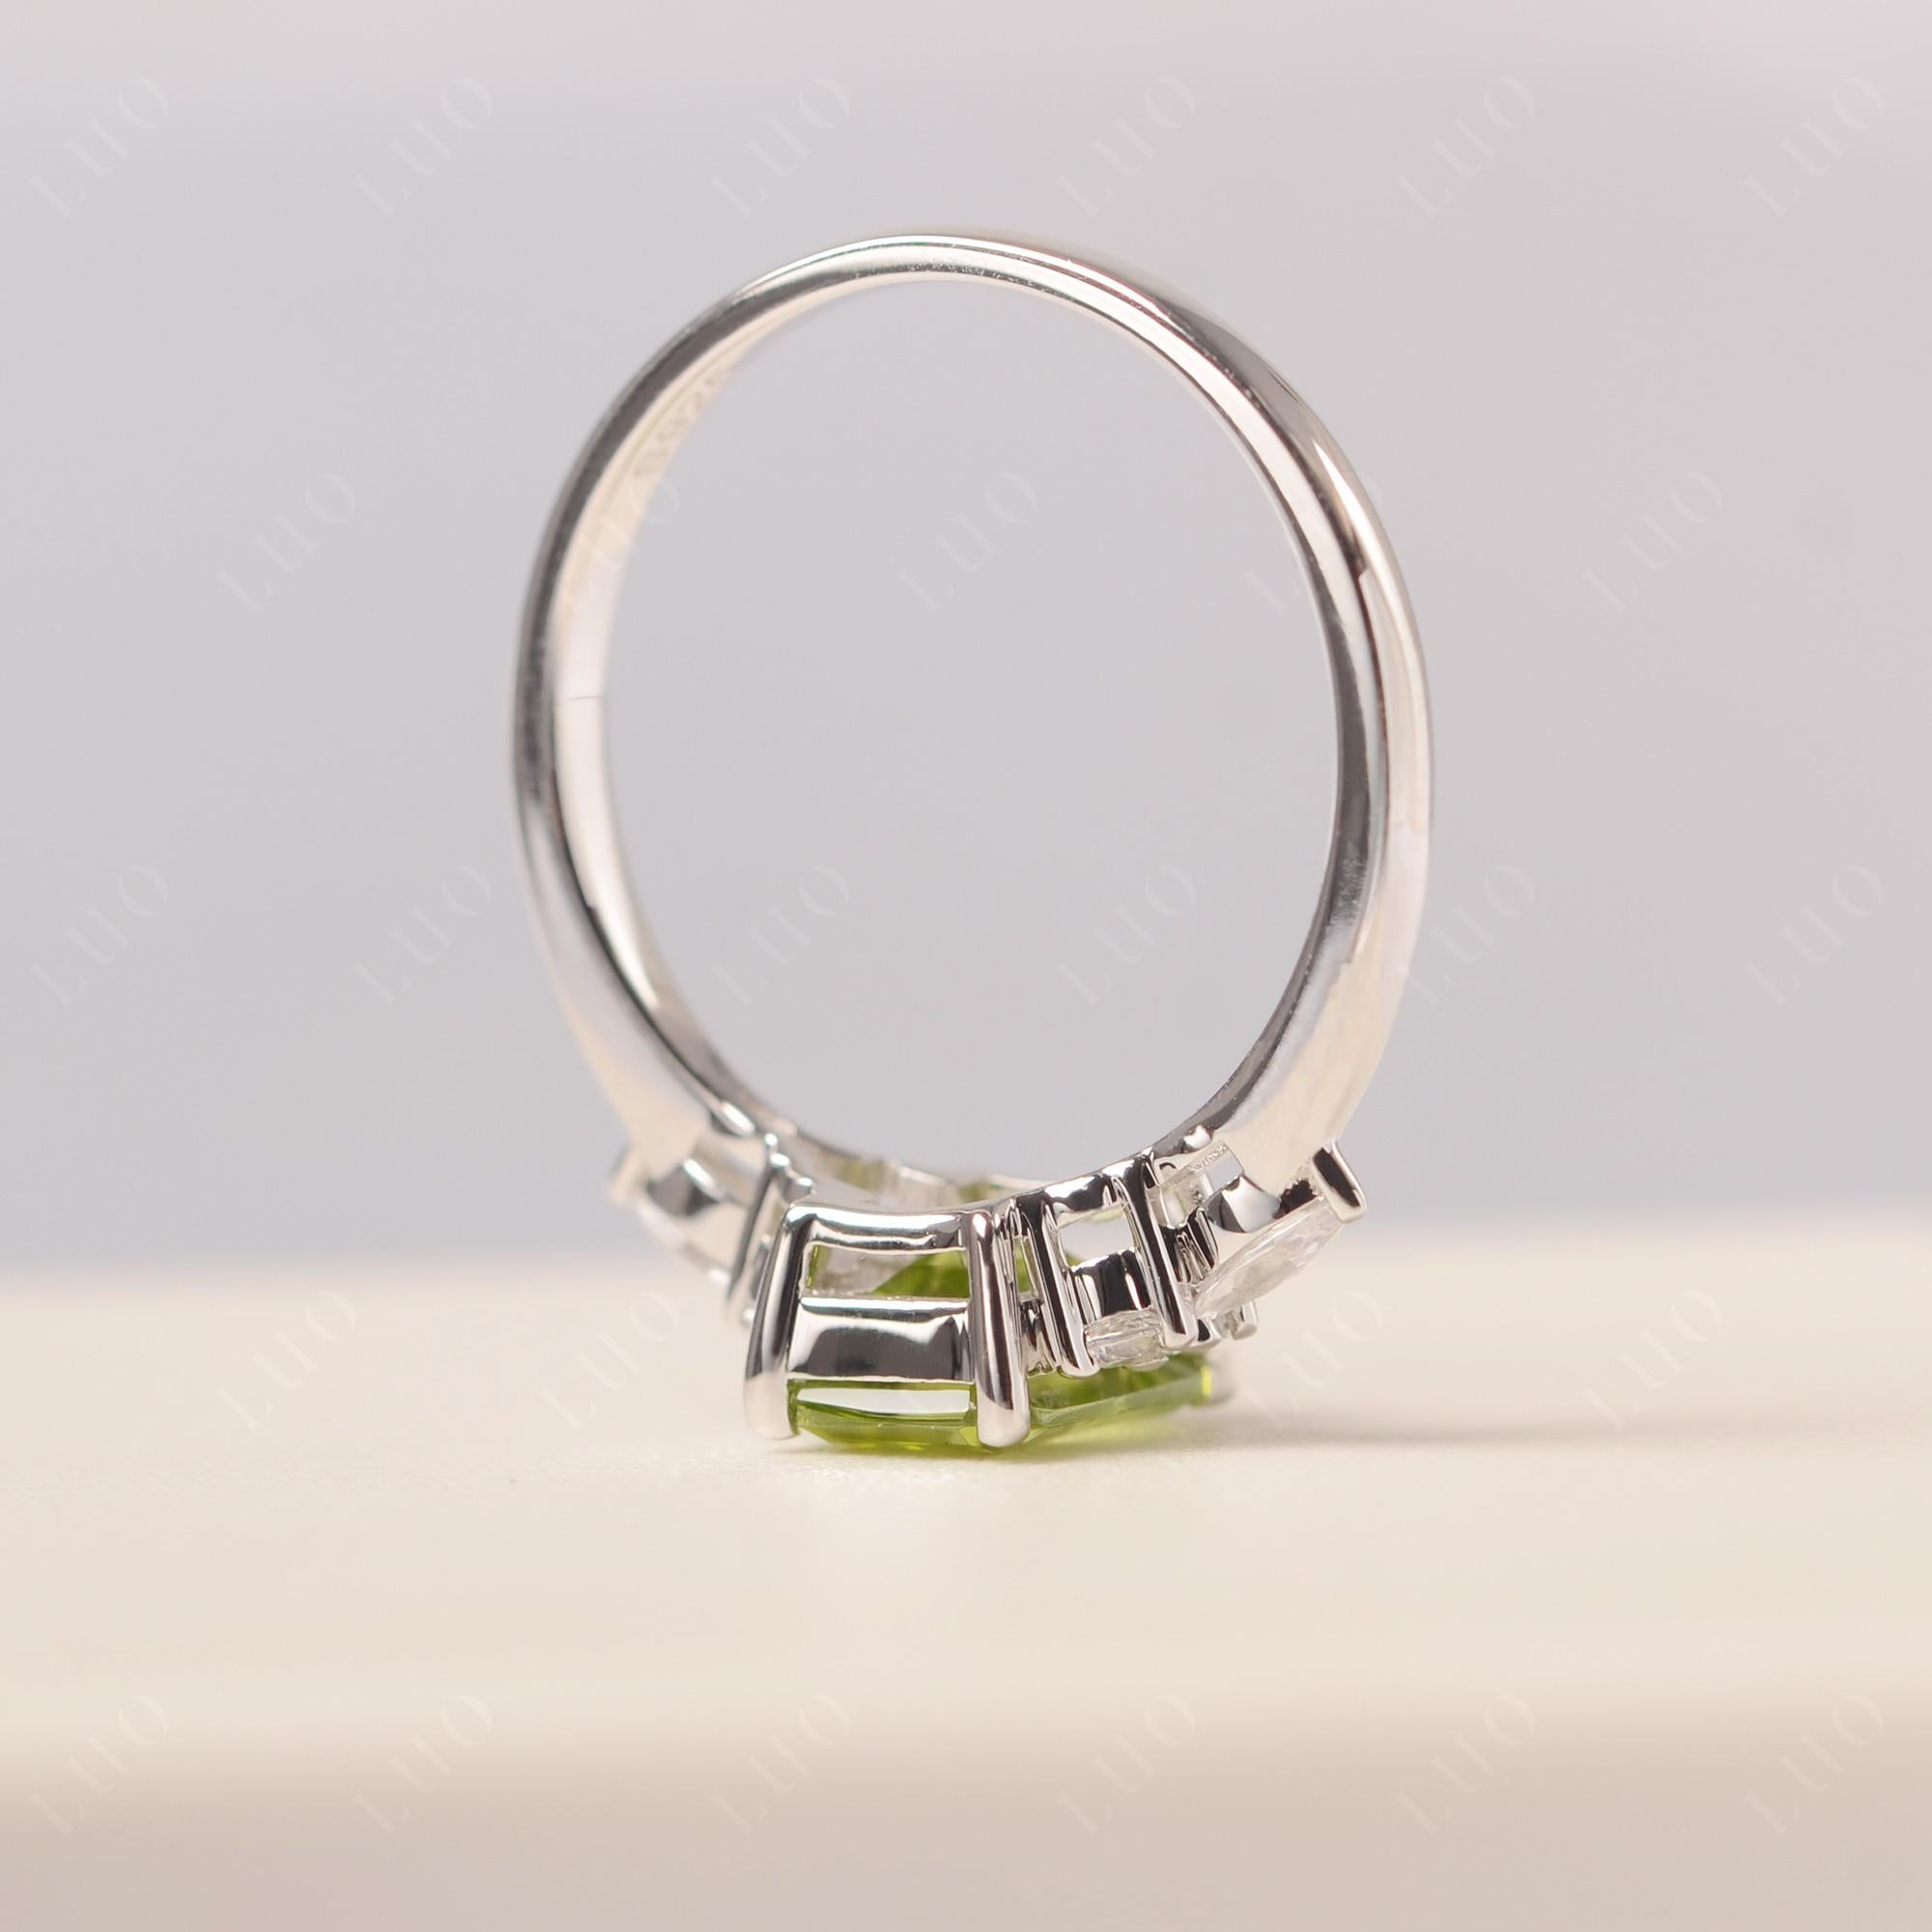 Simple Emerald Cut Peridot Ring - LUO Jewelry